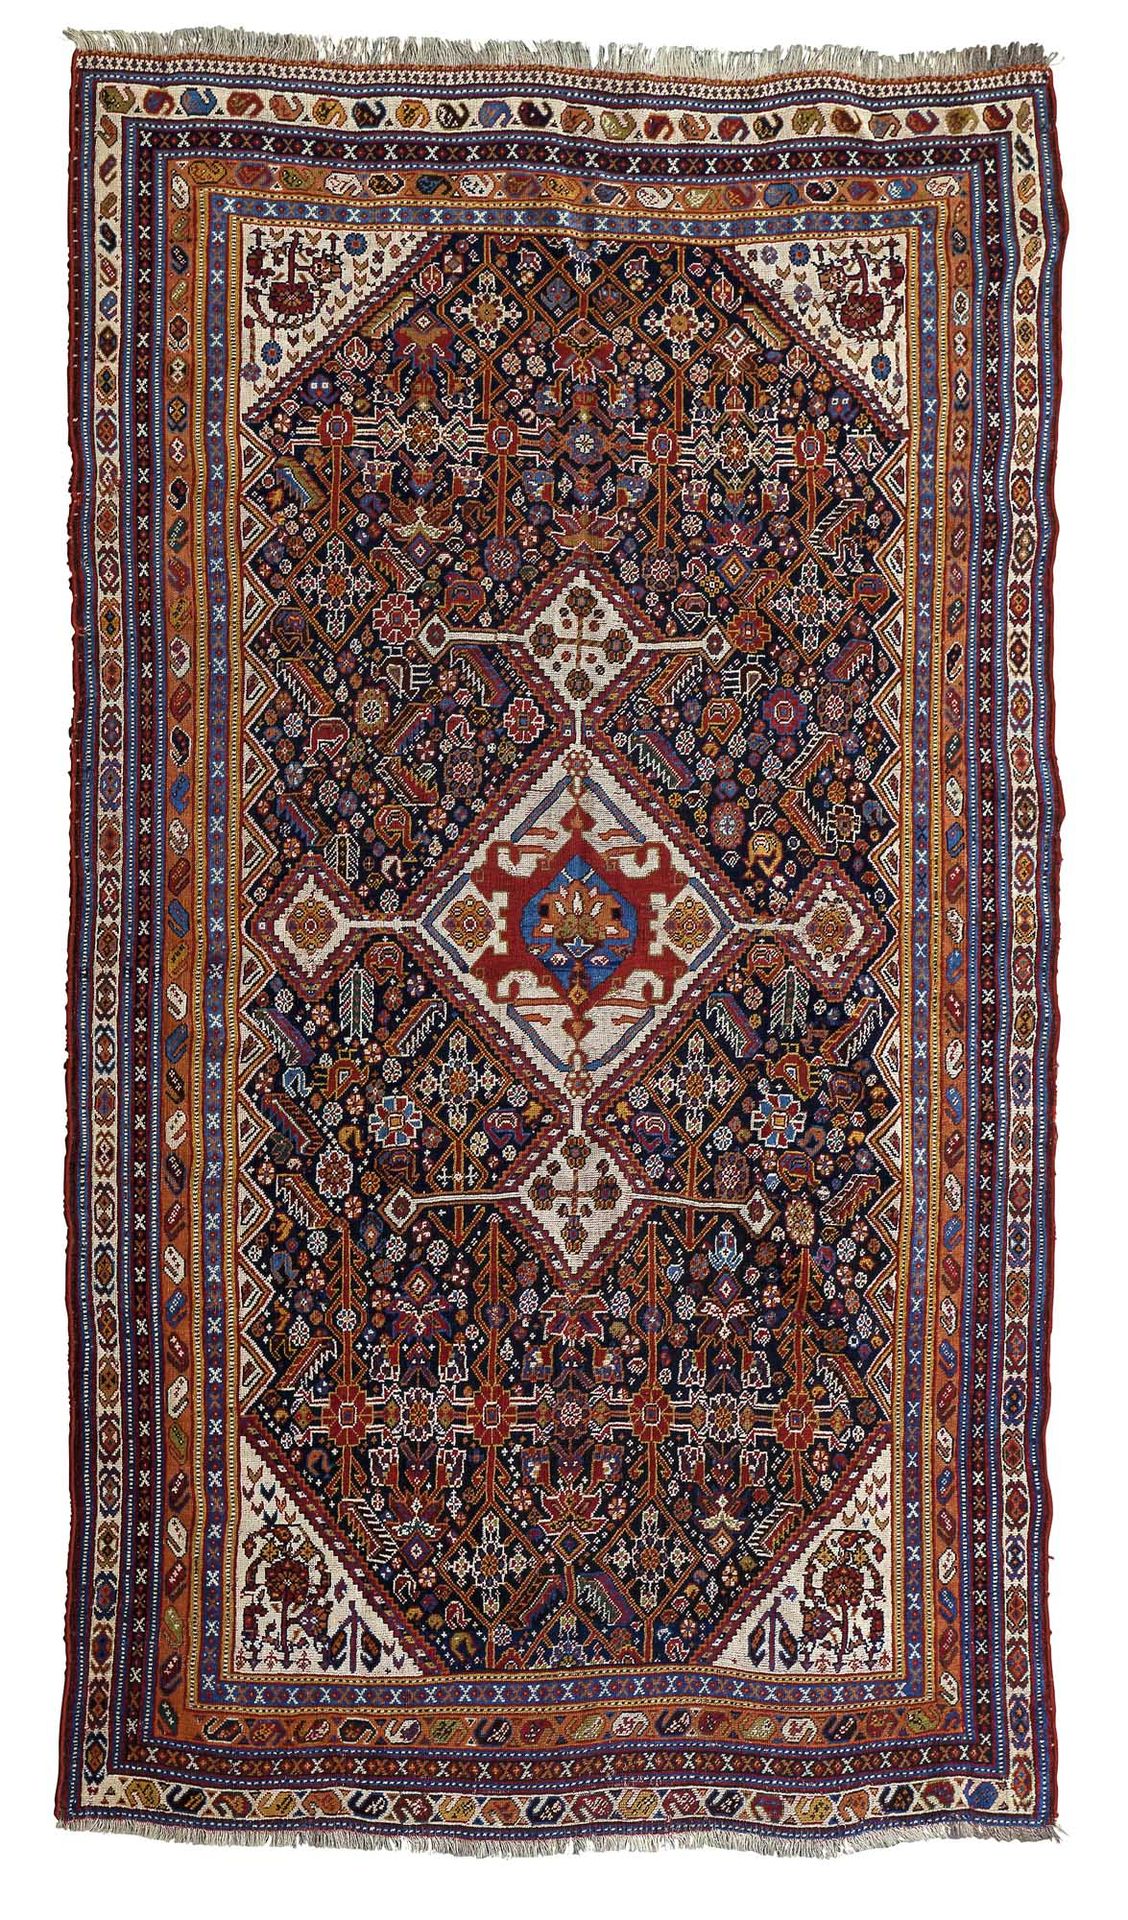 Null KASHGAI carpet (Persia), late 19th century

Dimensions : 218 x 140cm

Techn&hellip;